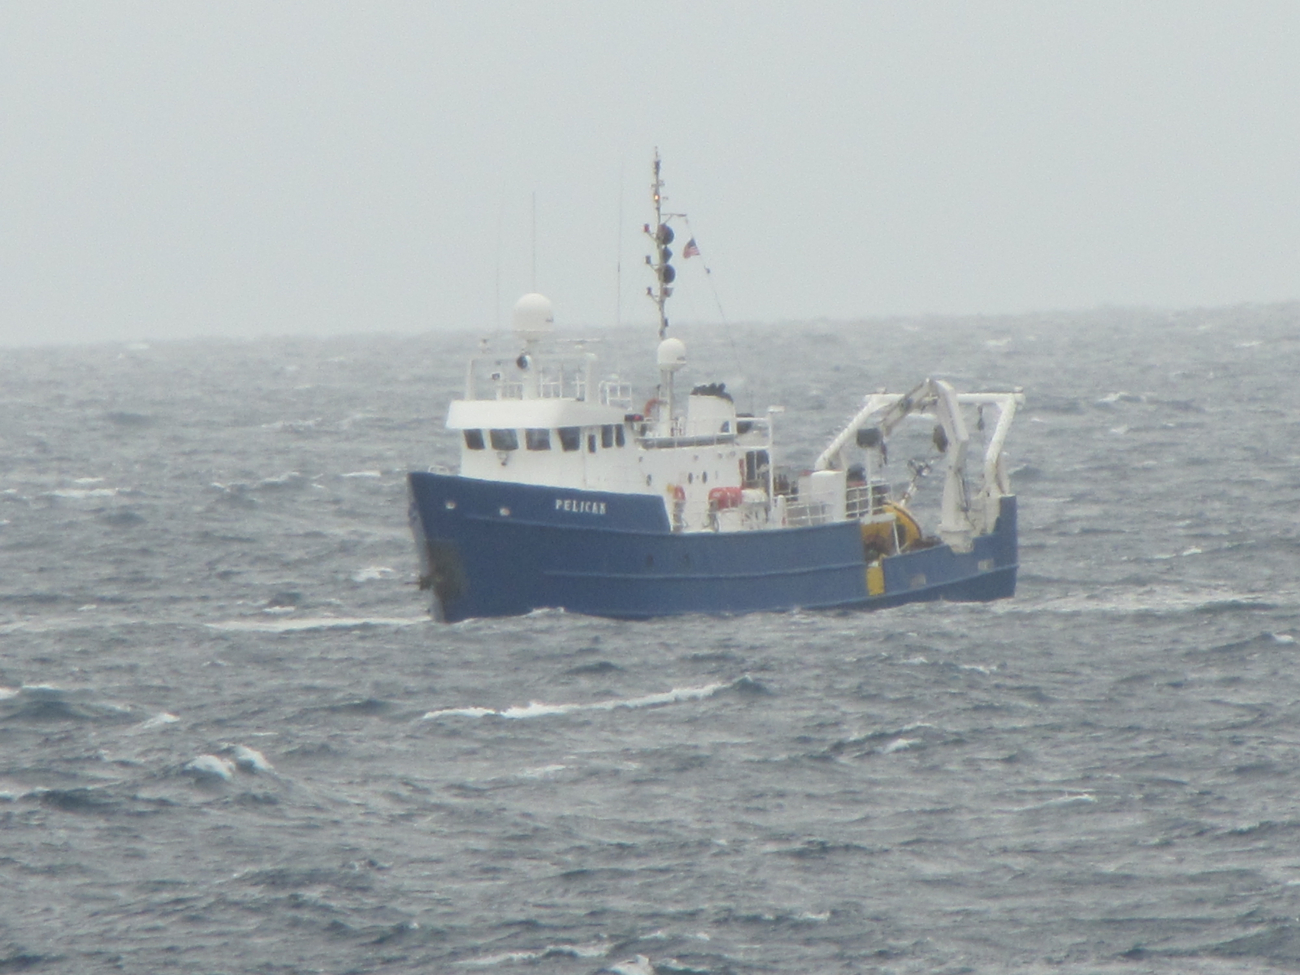 The Louisiana Universities Marine Consortium Research Vessel PELICAN